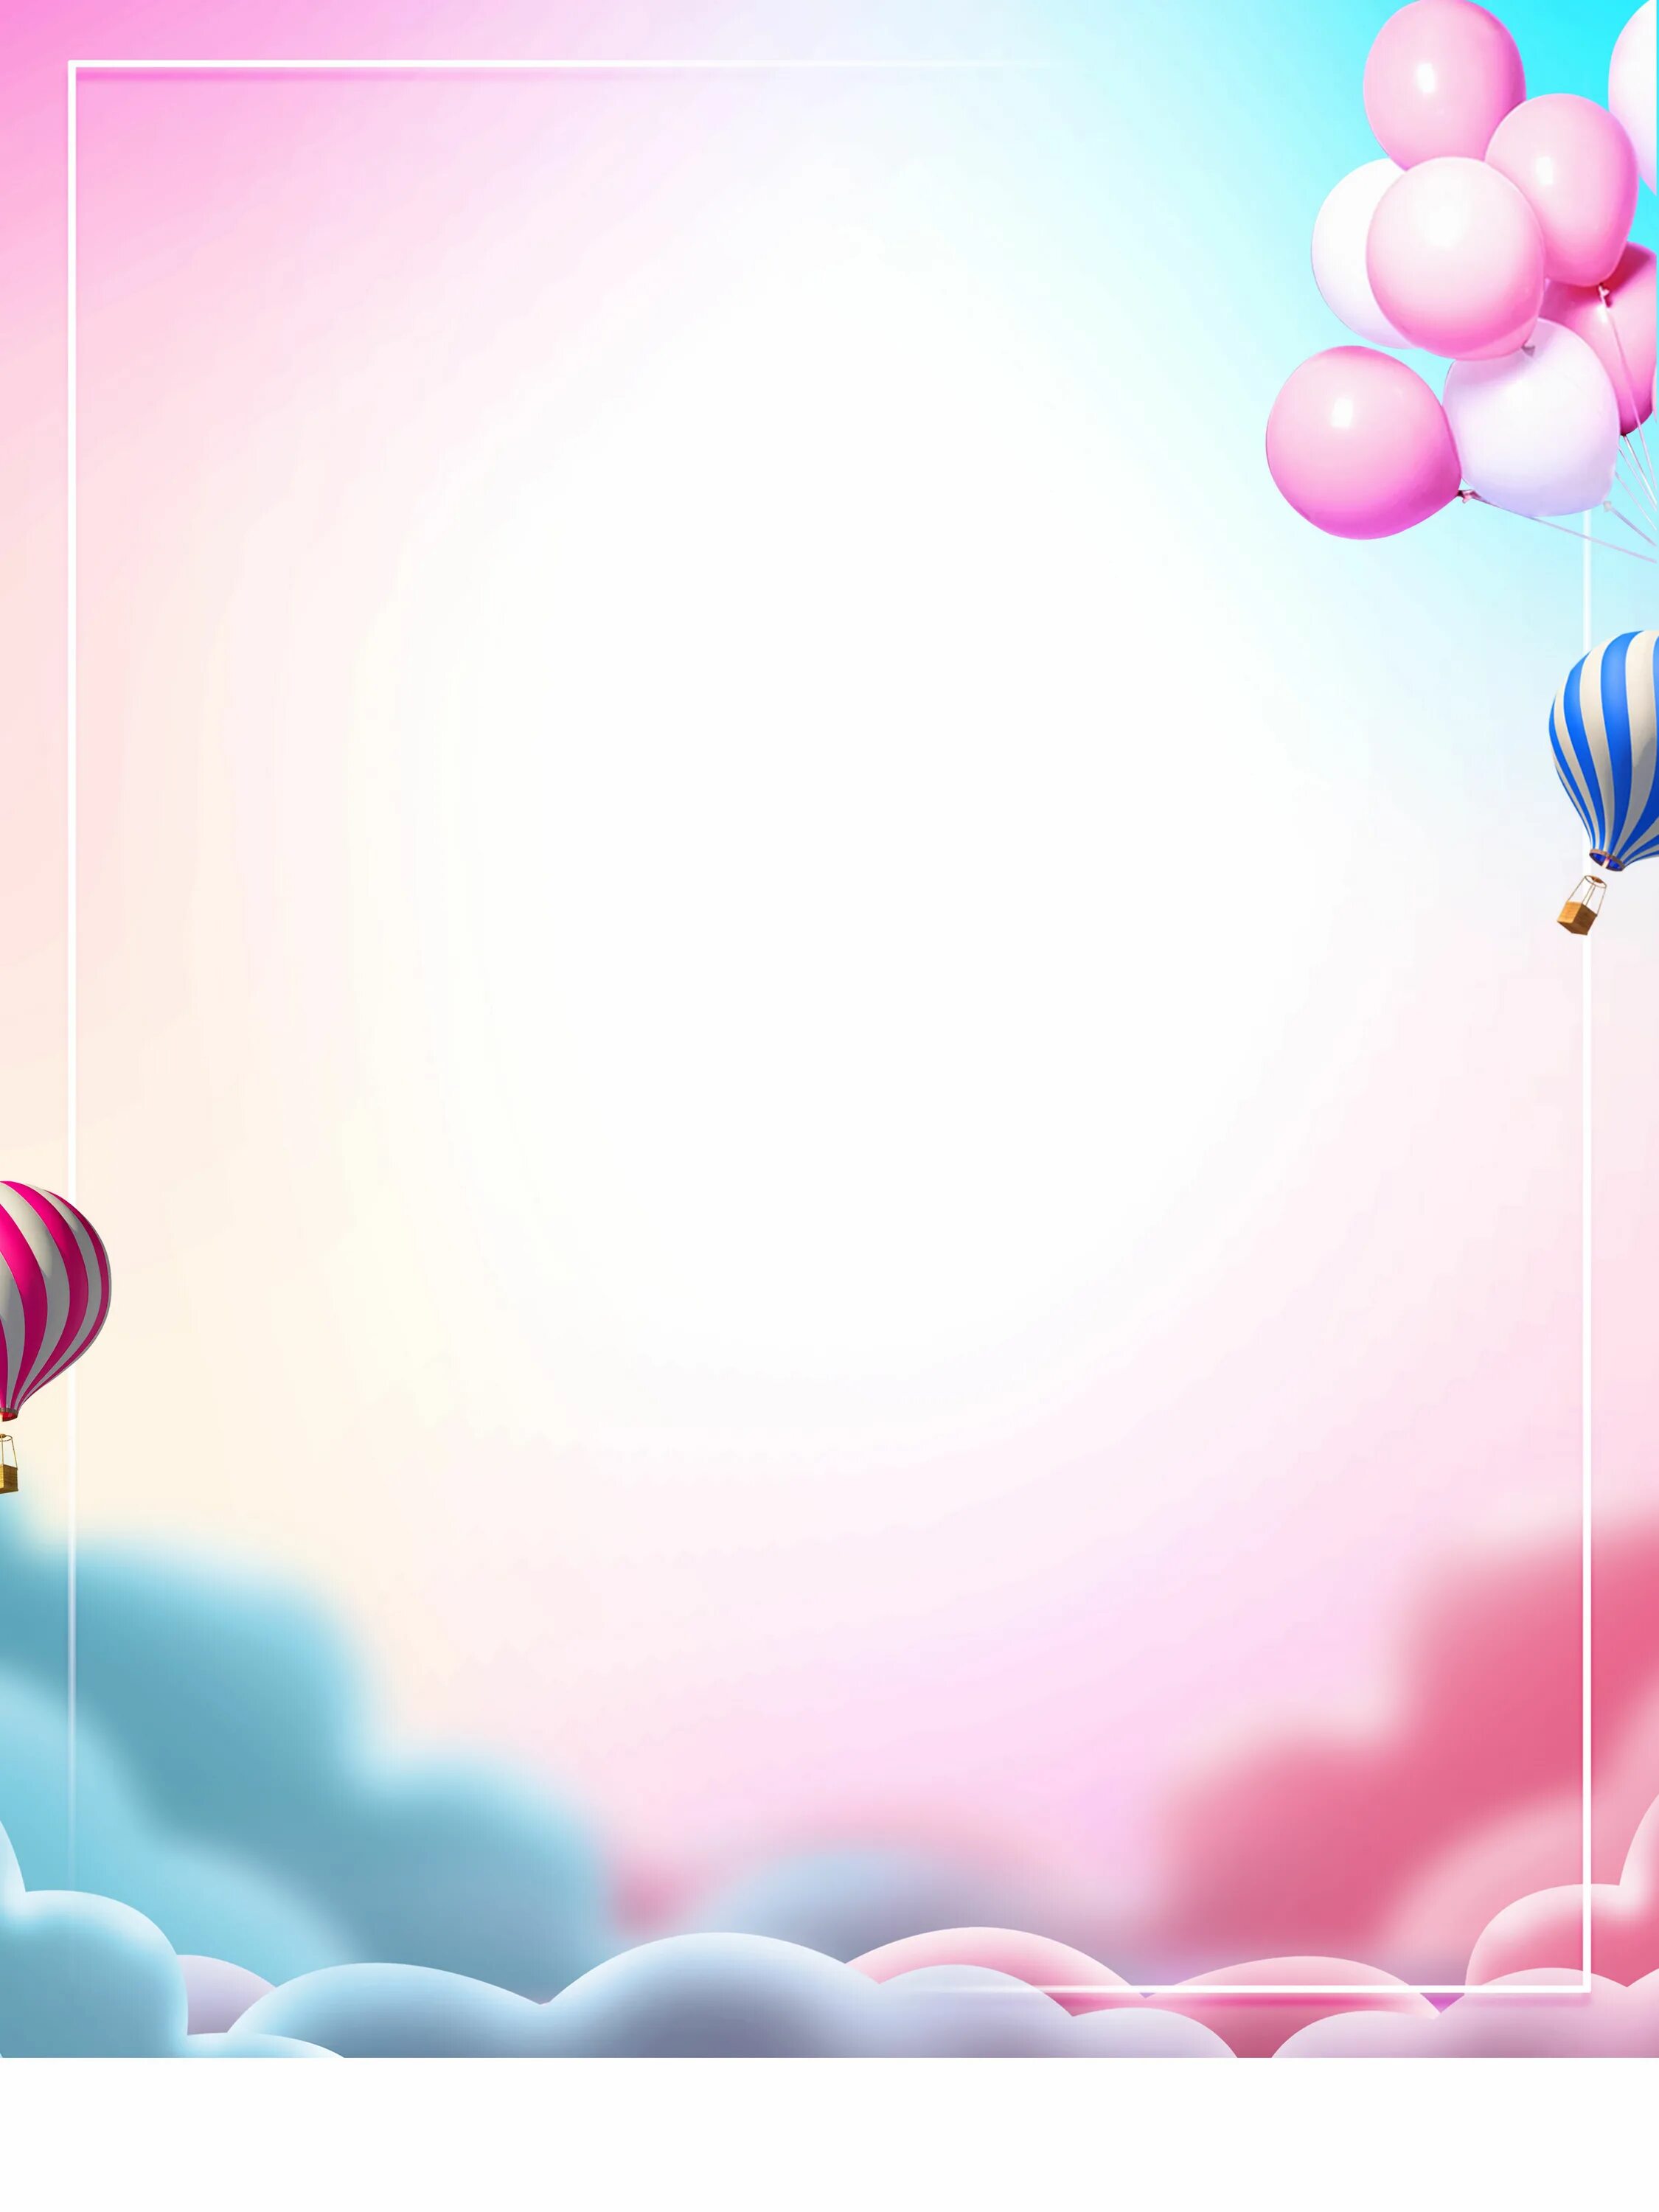 Шаблон с шарами. Праздничный фон. Праздничный фон день рождения. Фон с воздушными шарами. Фон шарики.